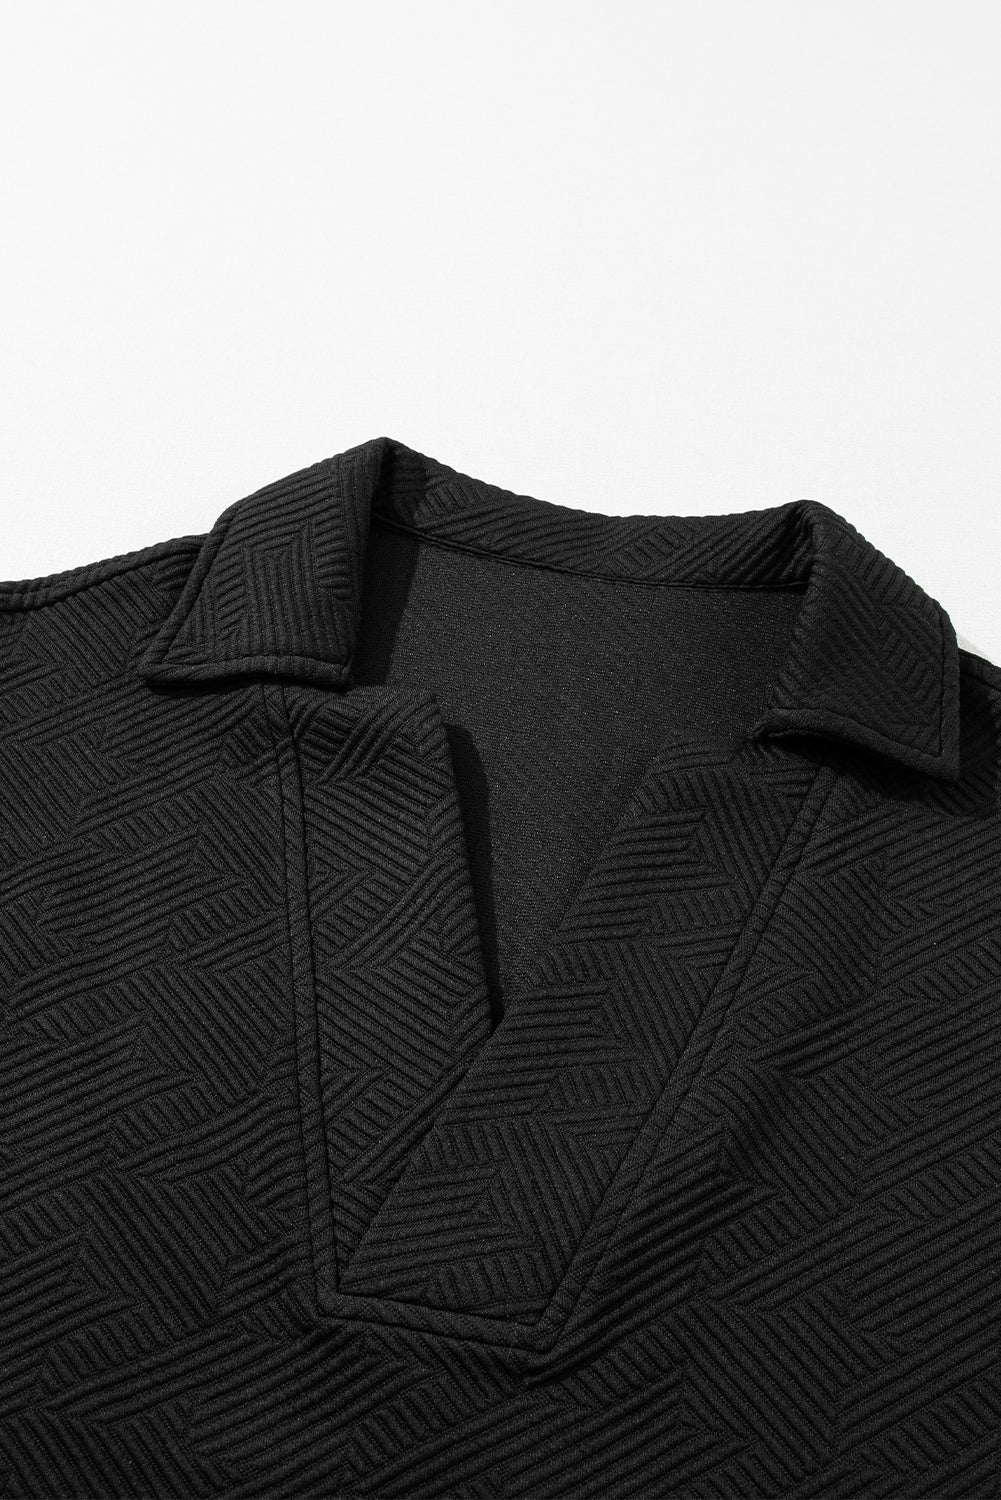 Black Textured V Neck Collared Short Sleeve Top